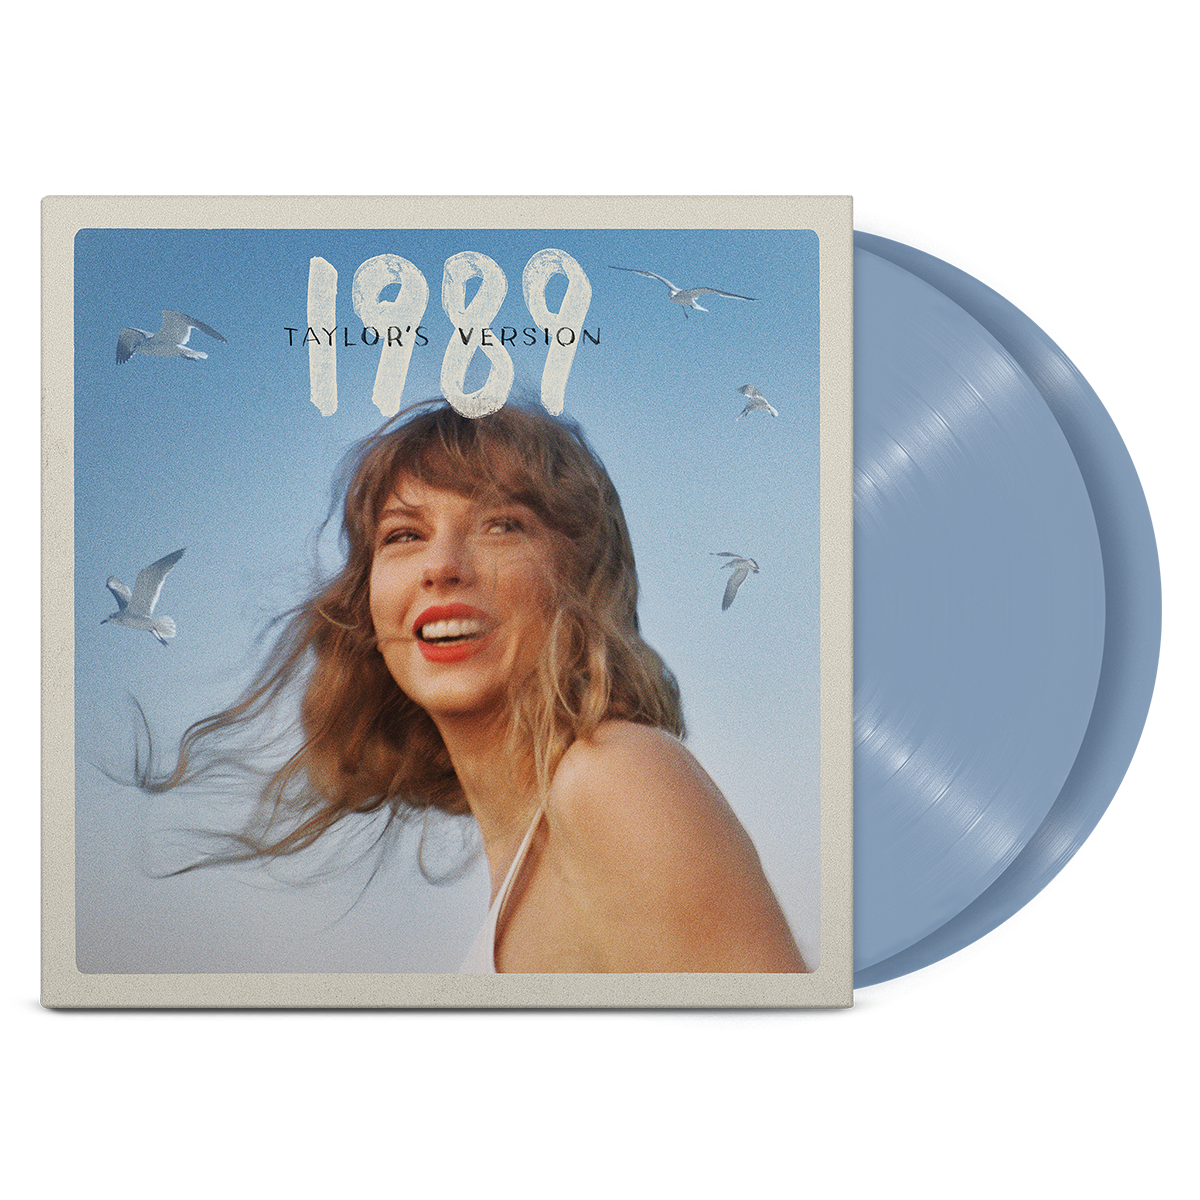 Taylor Swift - 1989 (Taylor's Version)[Crystal Skies Blue 2LP]